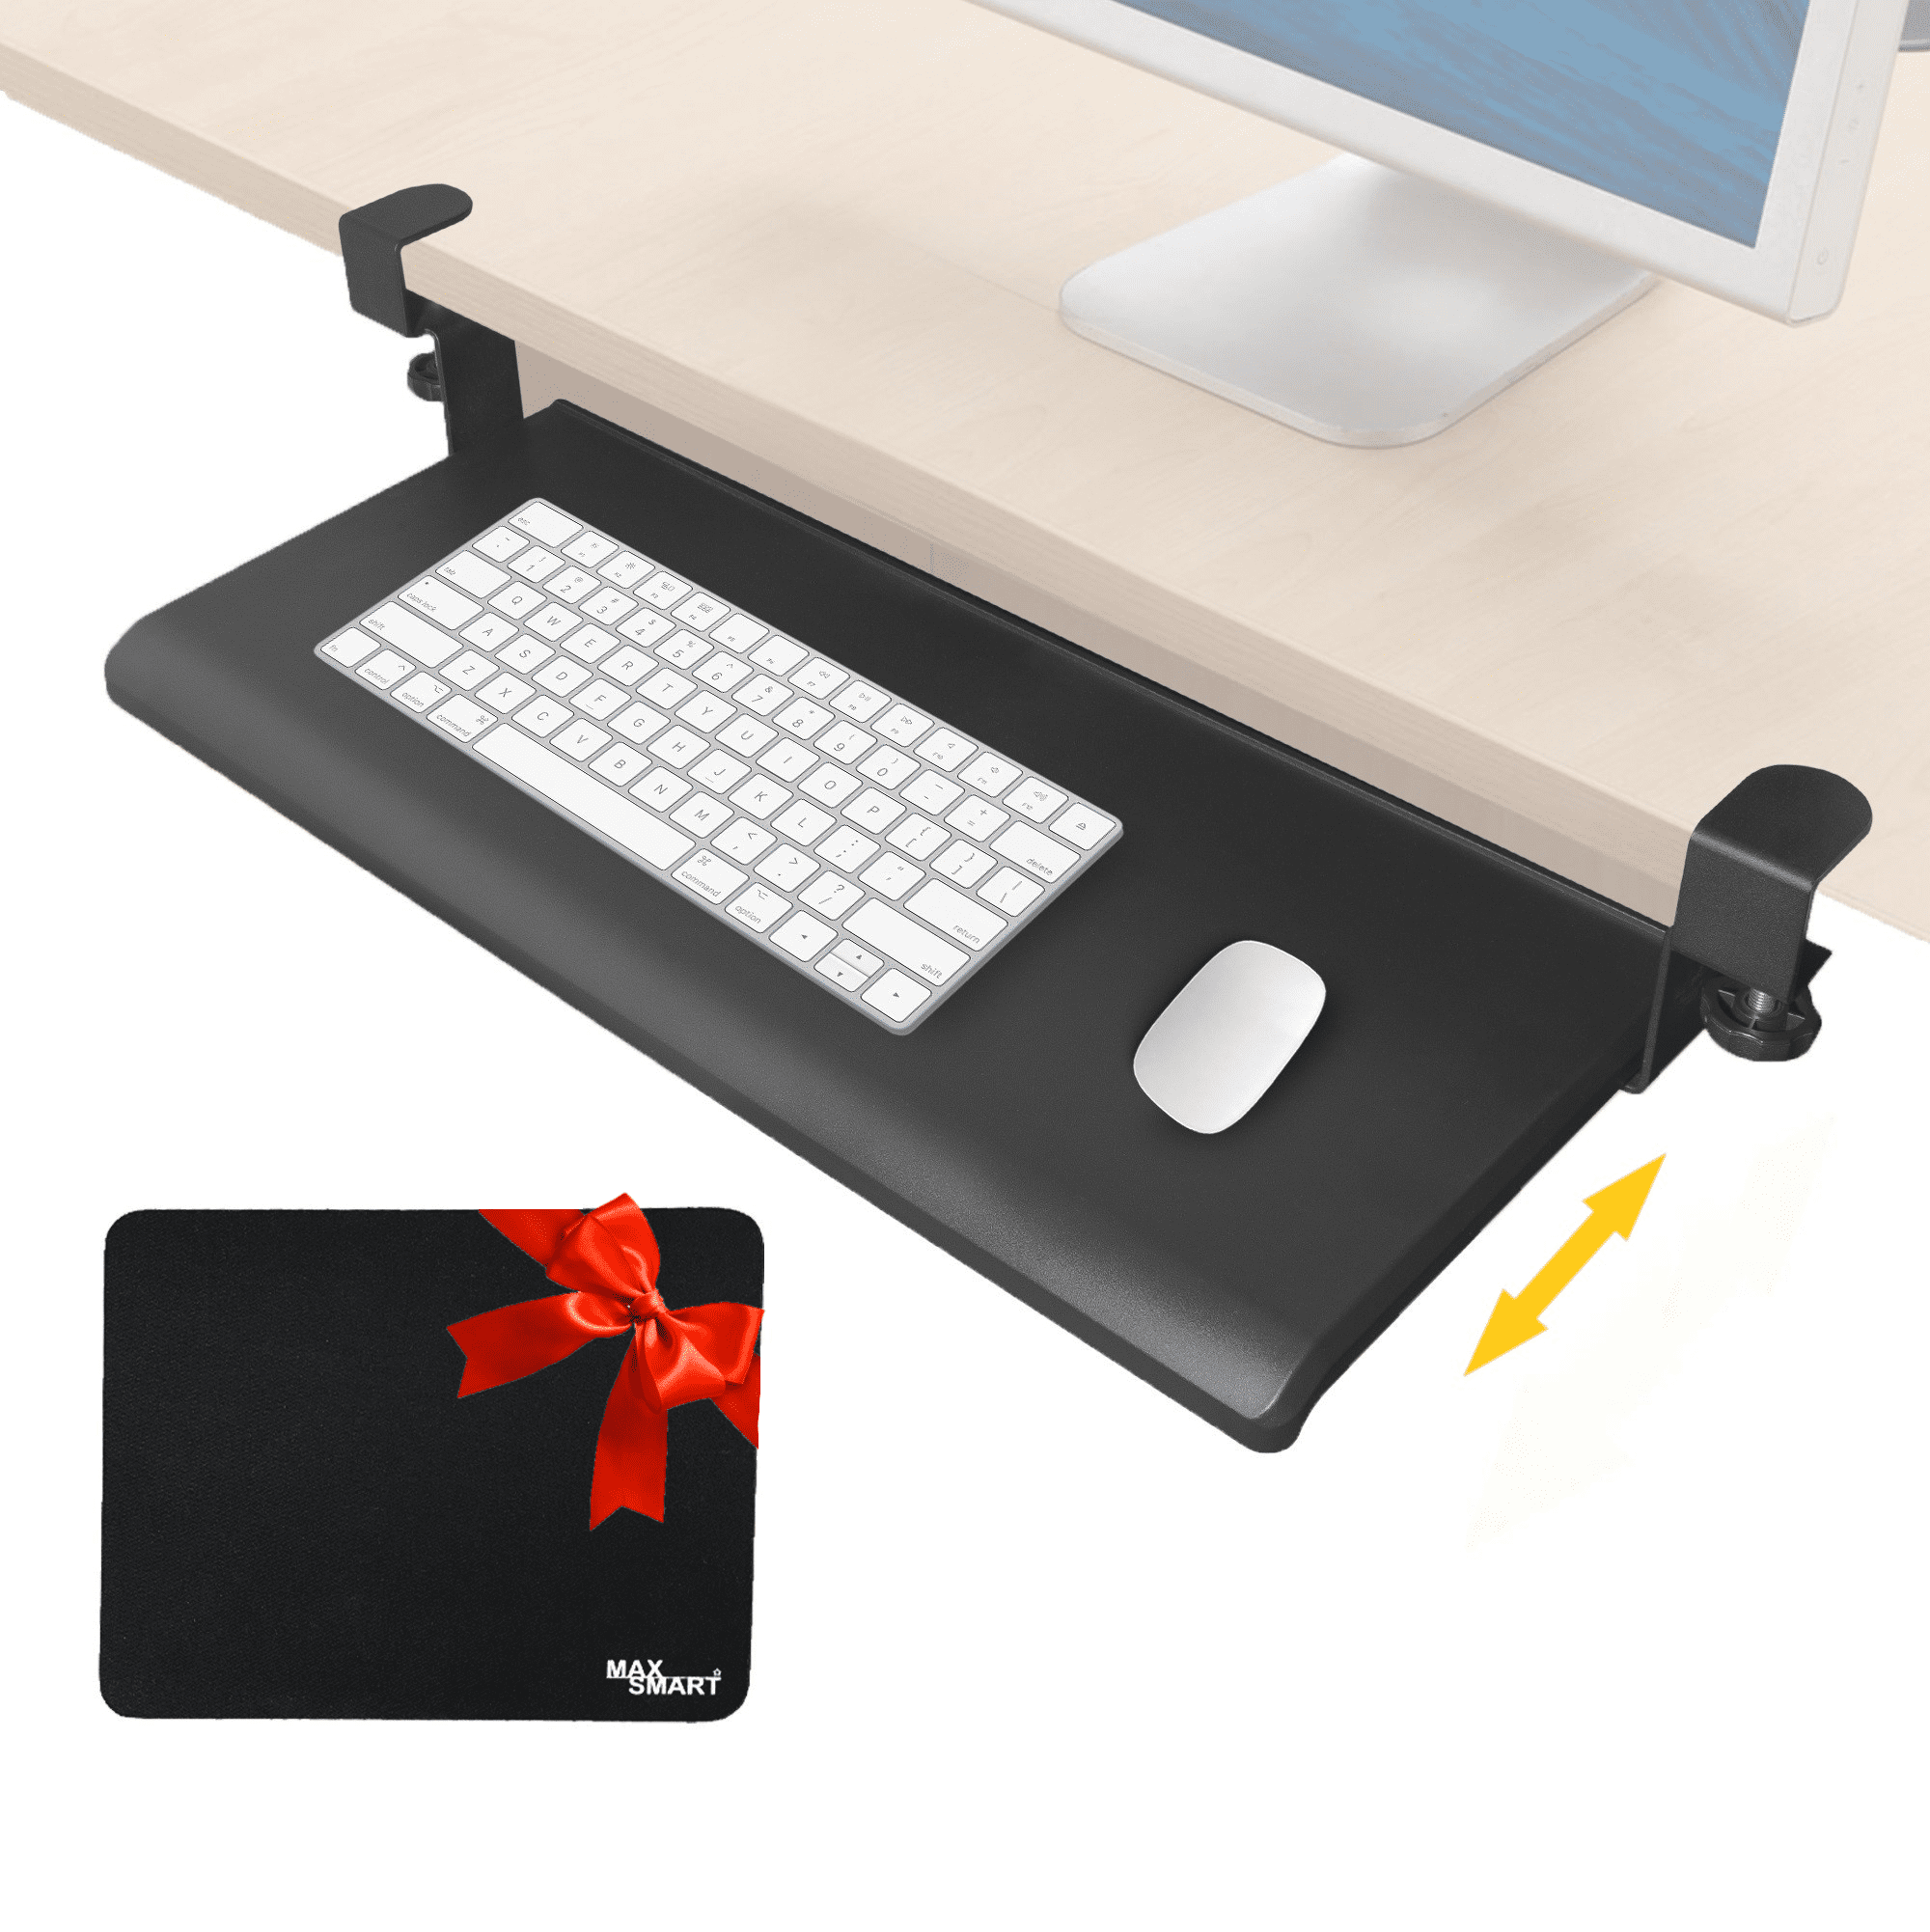 MAX SMART Clamp-on Desk Pegboard, Desk Privacy Panel, Office